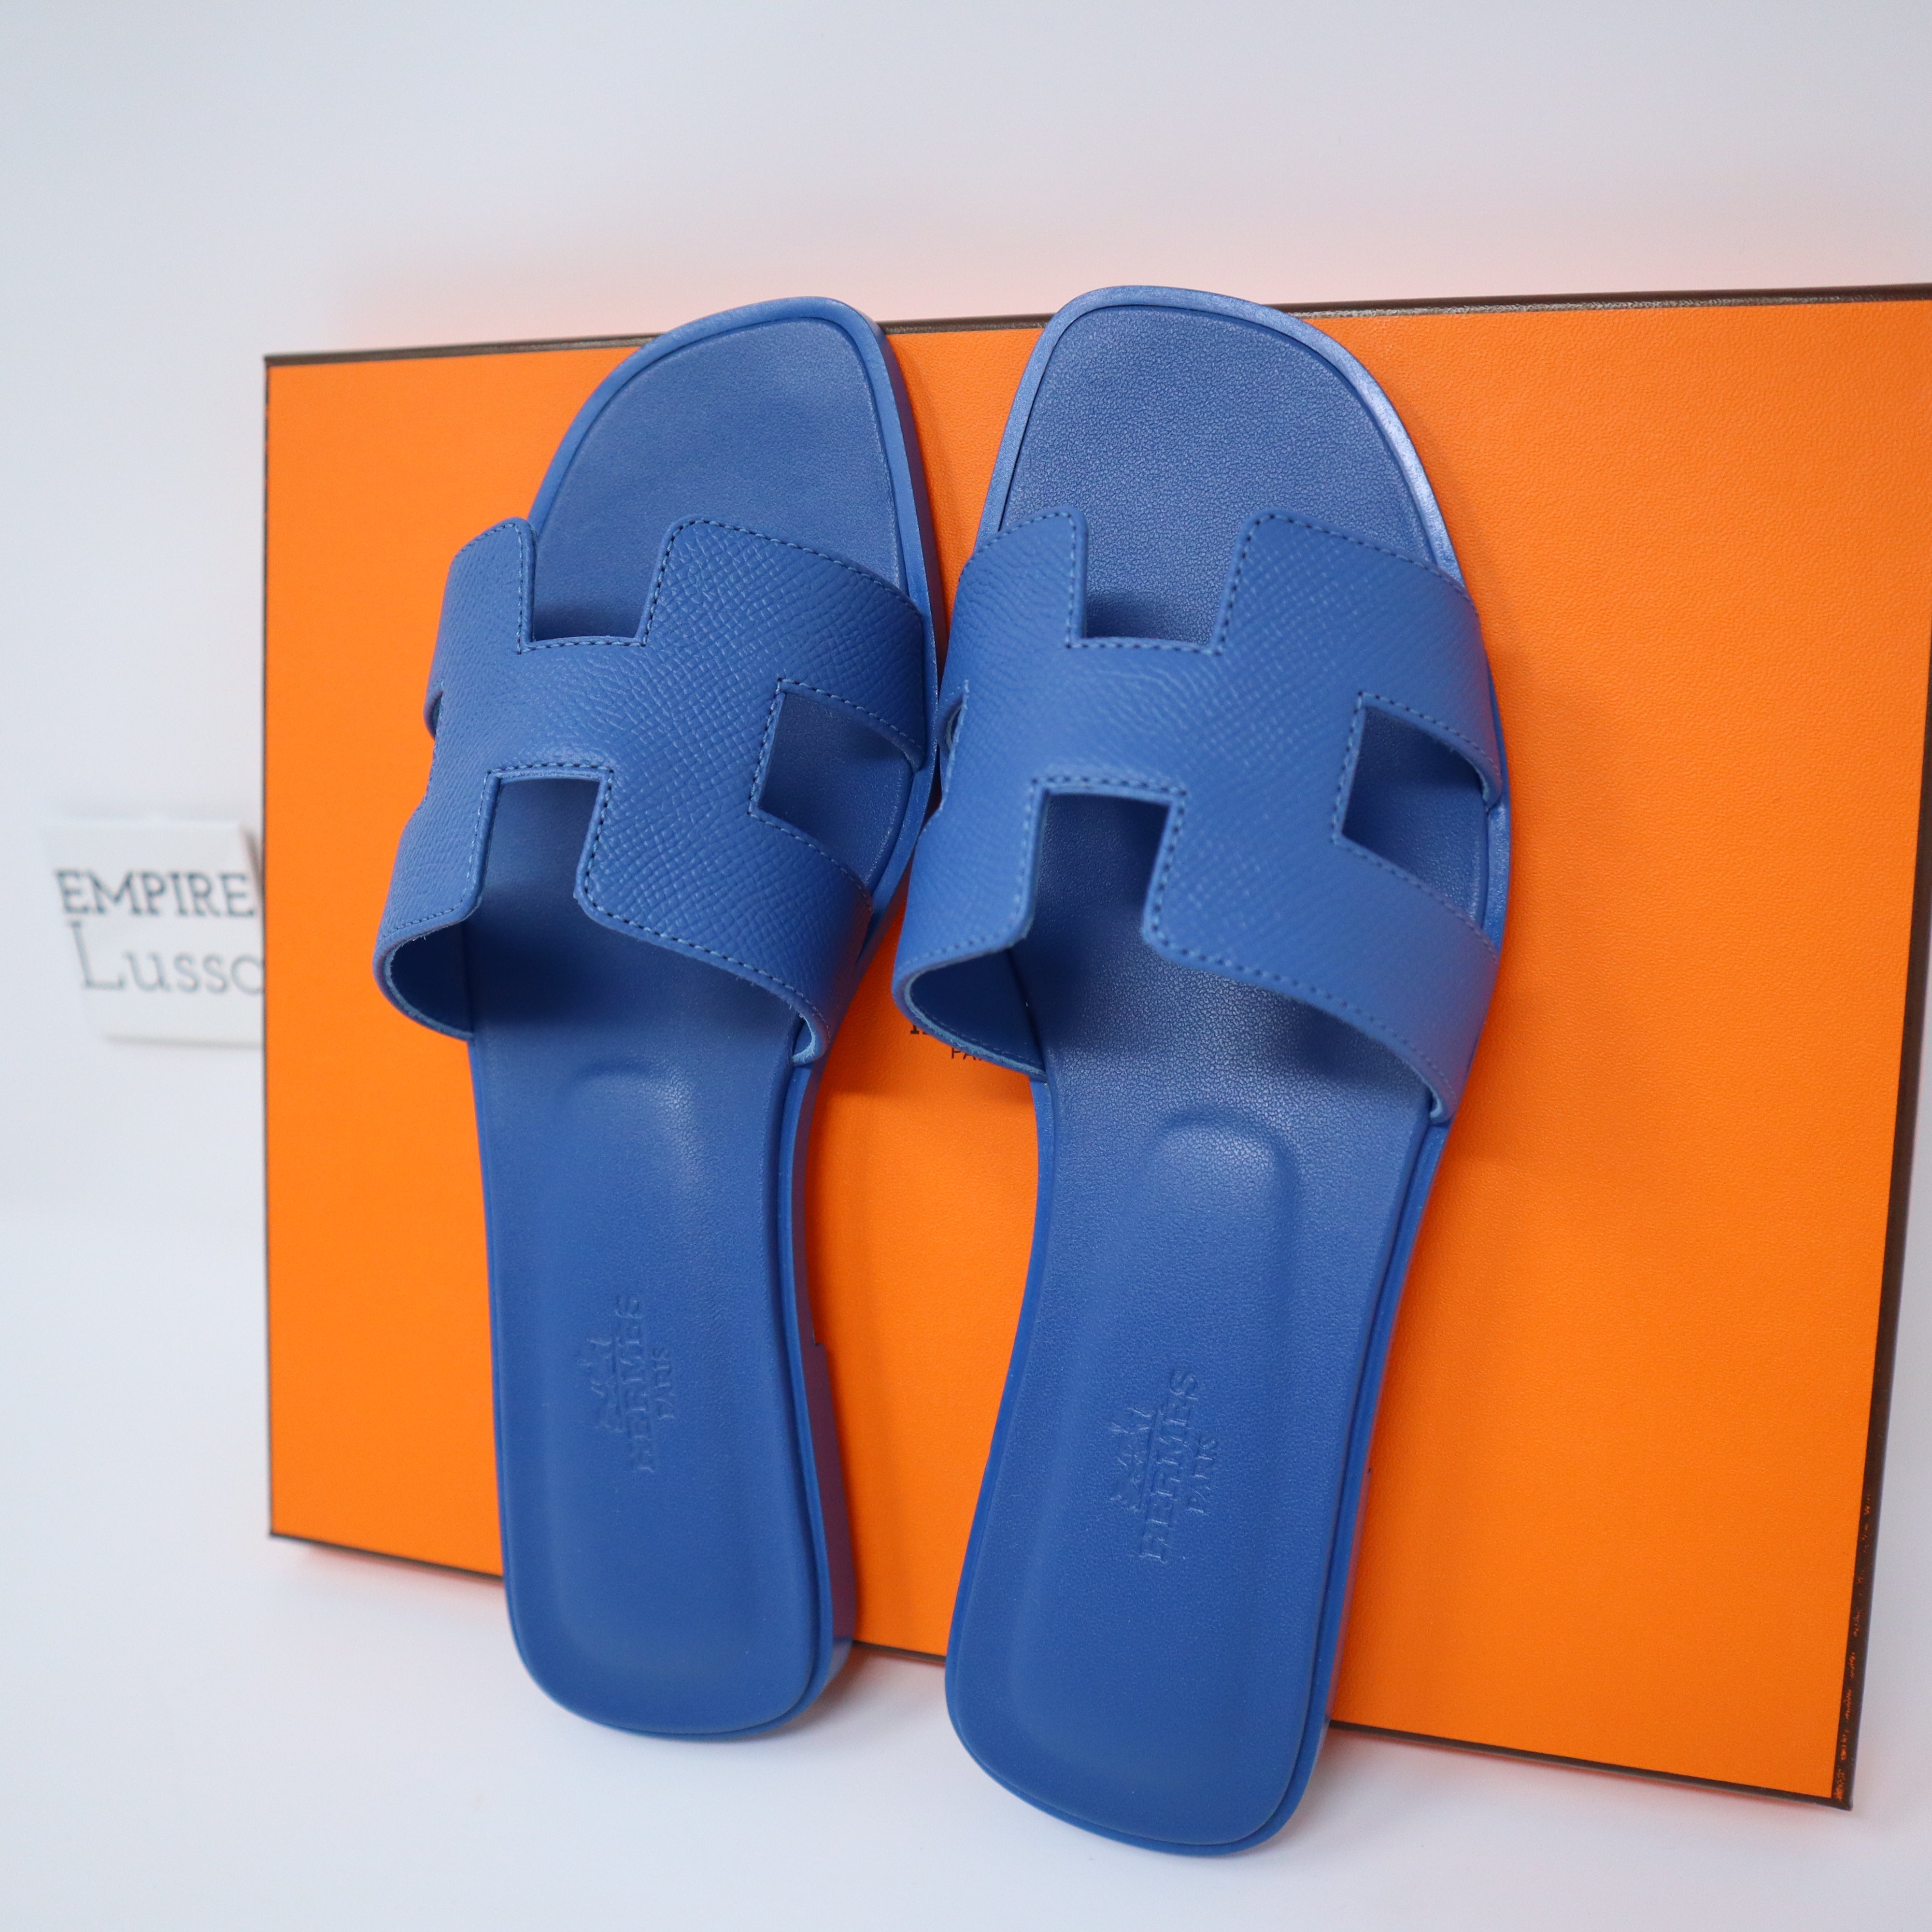 H*ermes Oran Sandals in Dark Blue 37, Women's Fashion, Footwear